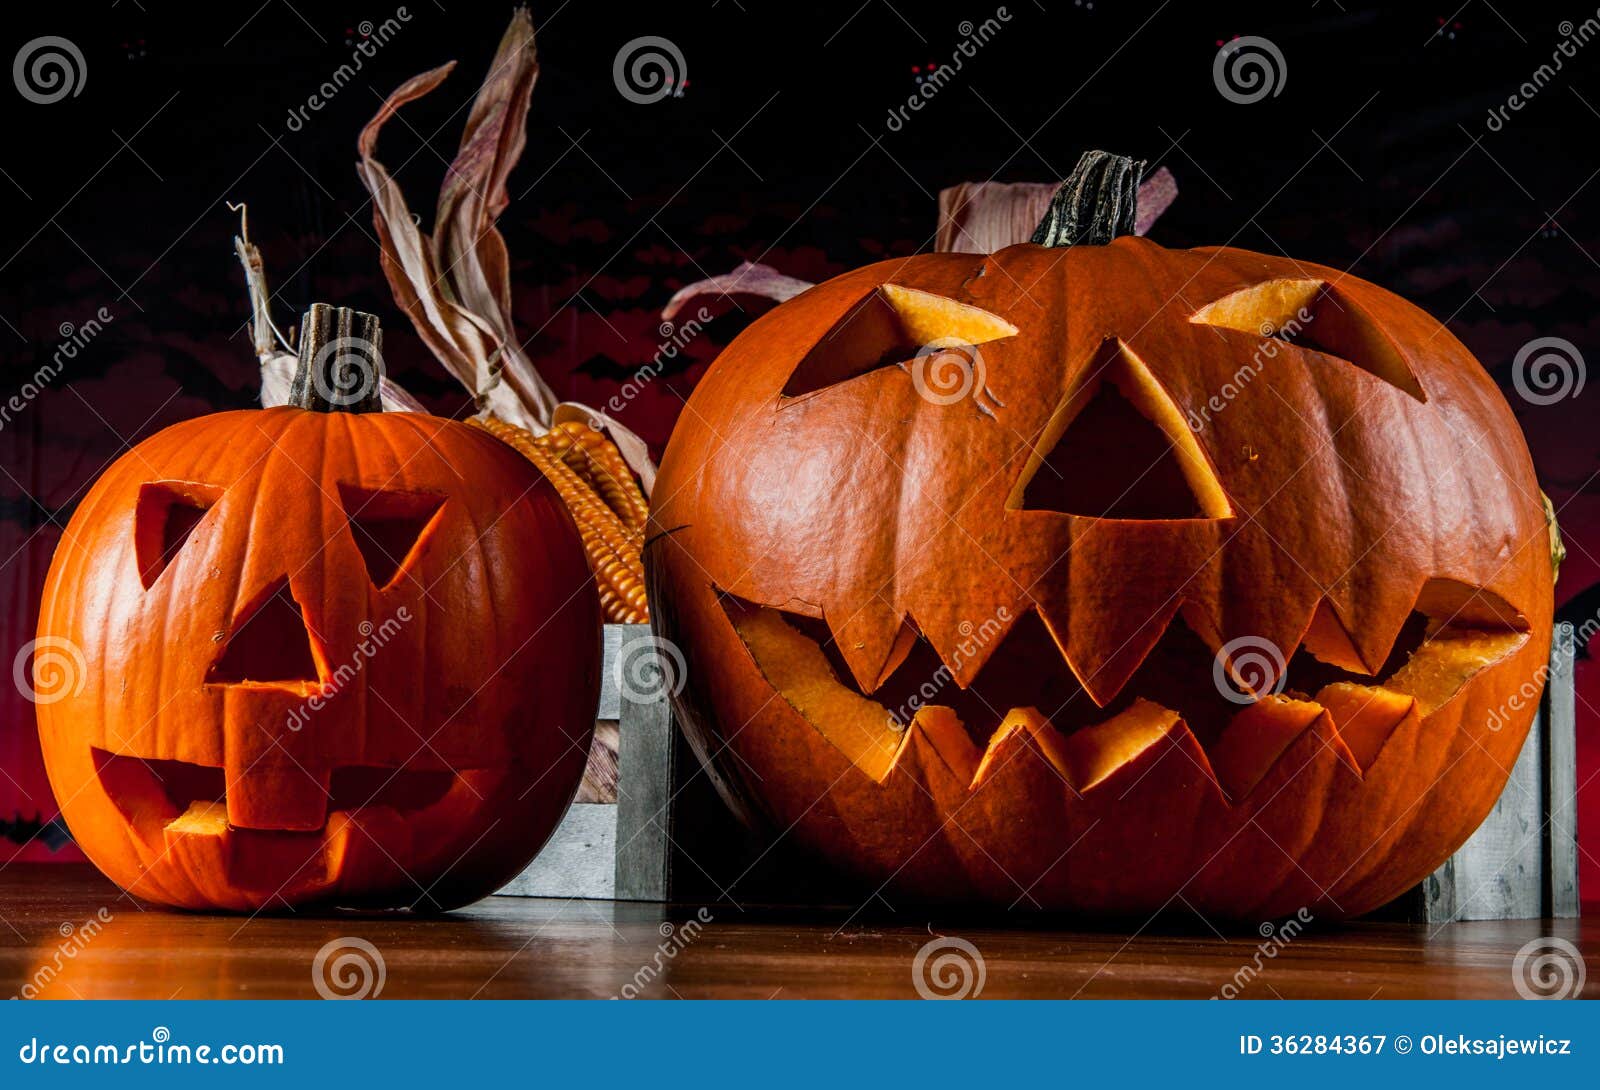 Halloween pumpkin stock image. Image of face, pumpkin - 36284367